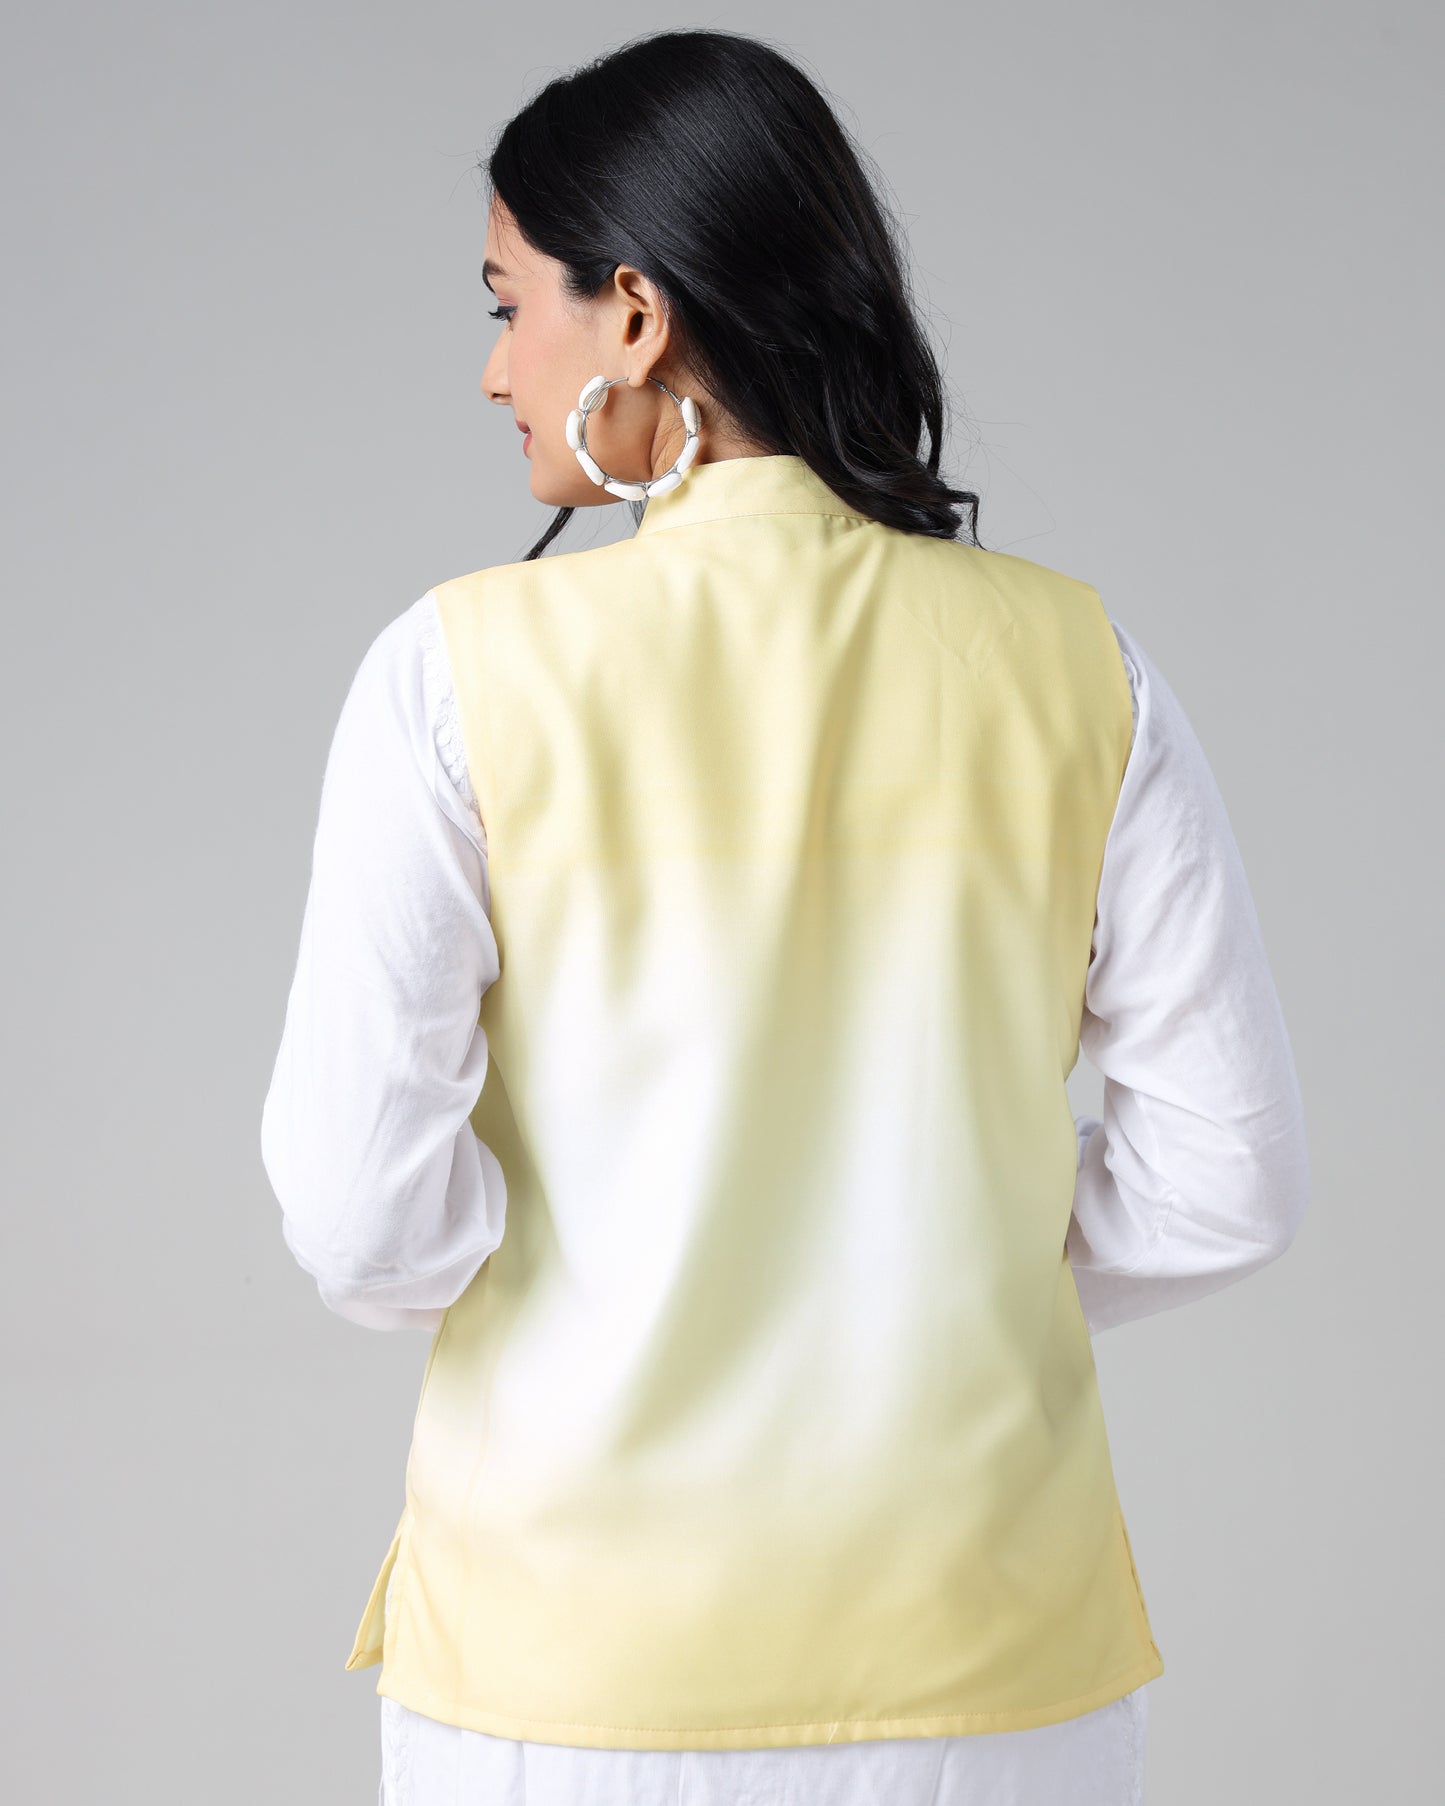 The Freedom Edit: Women's Sleeveless Jacket